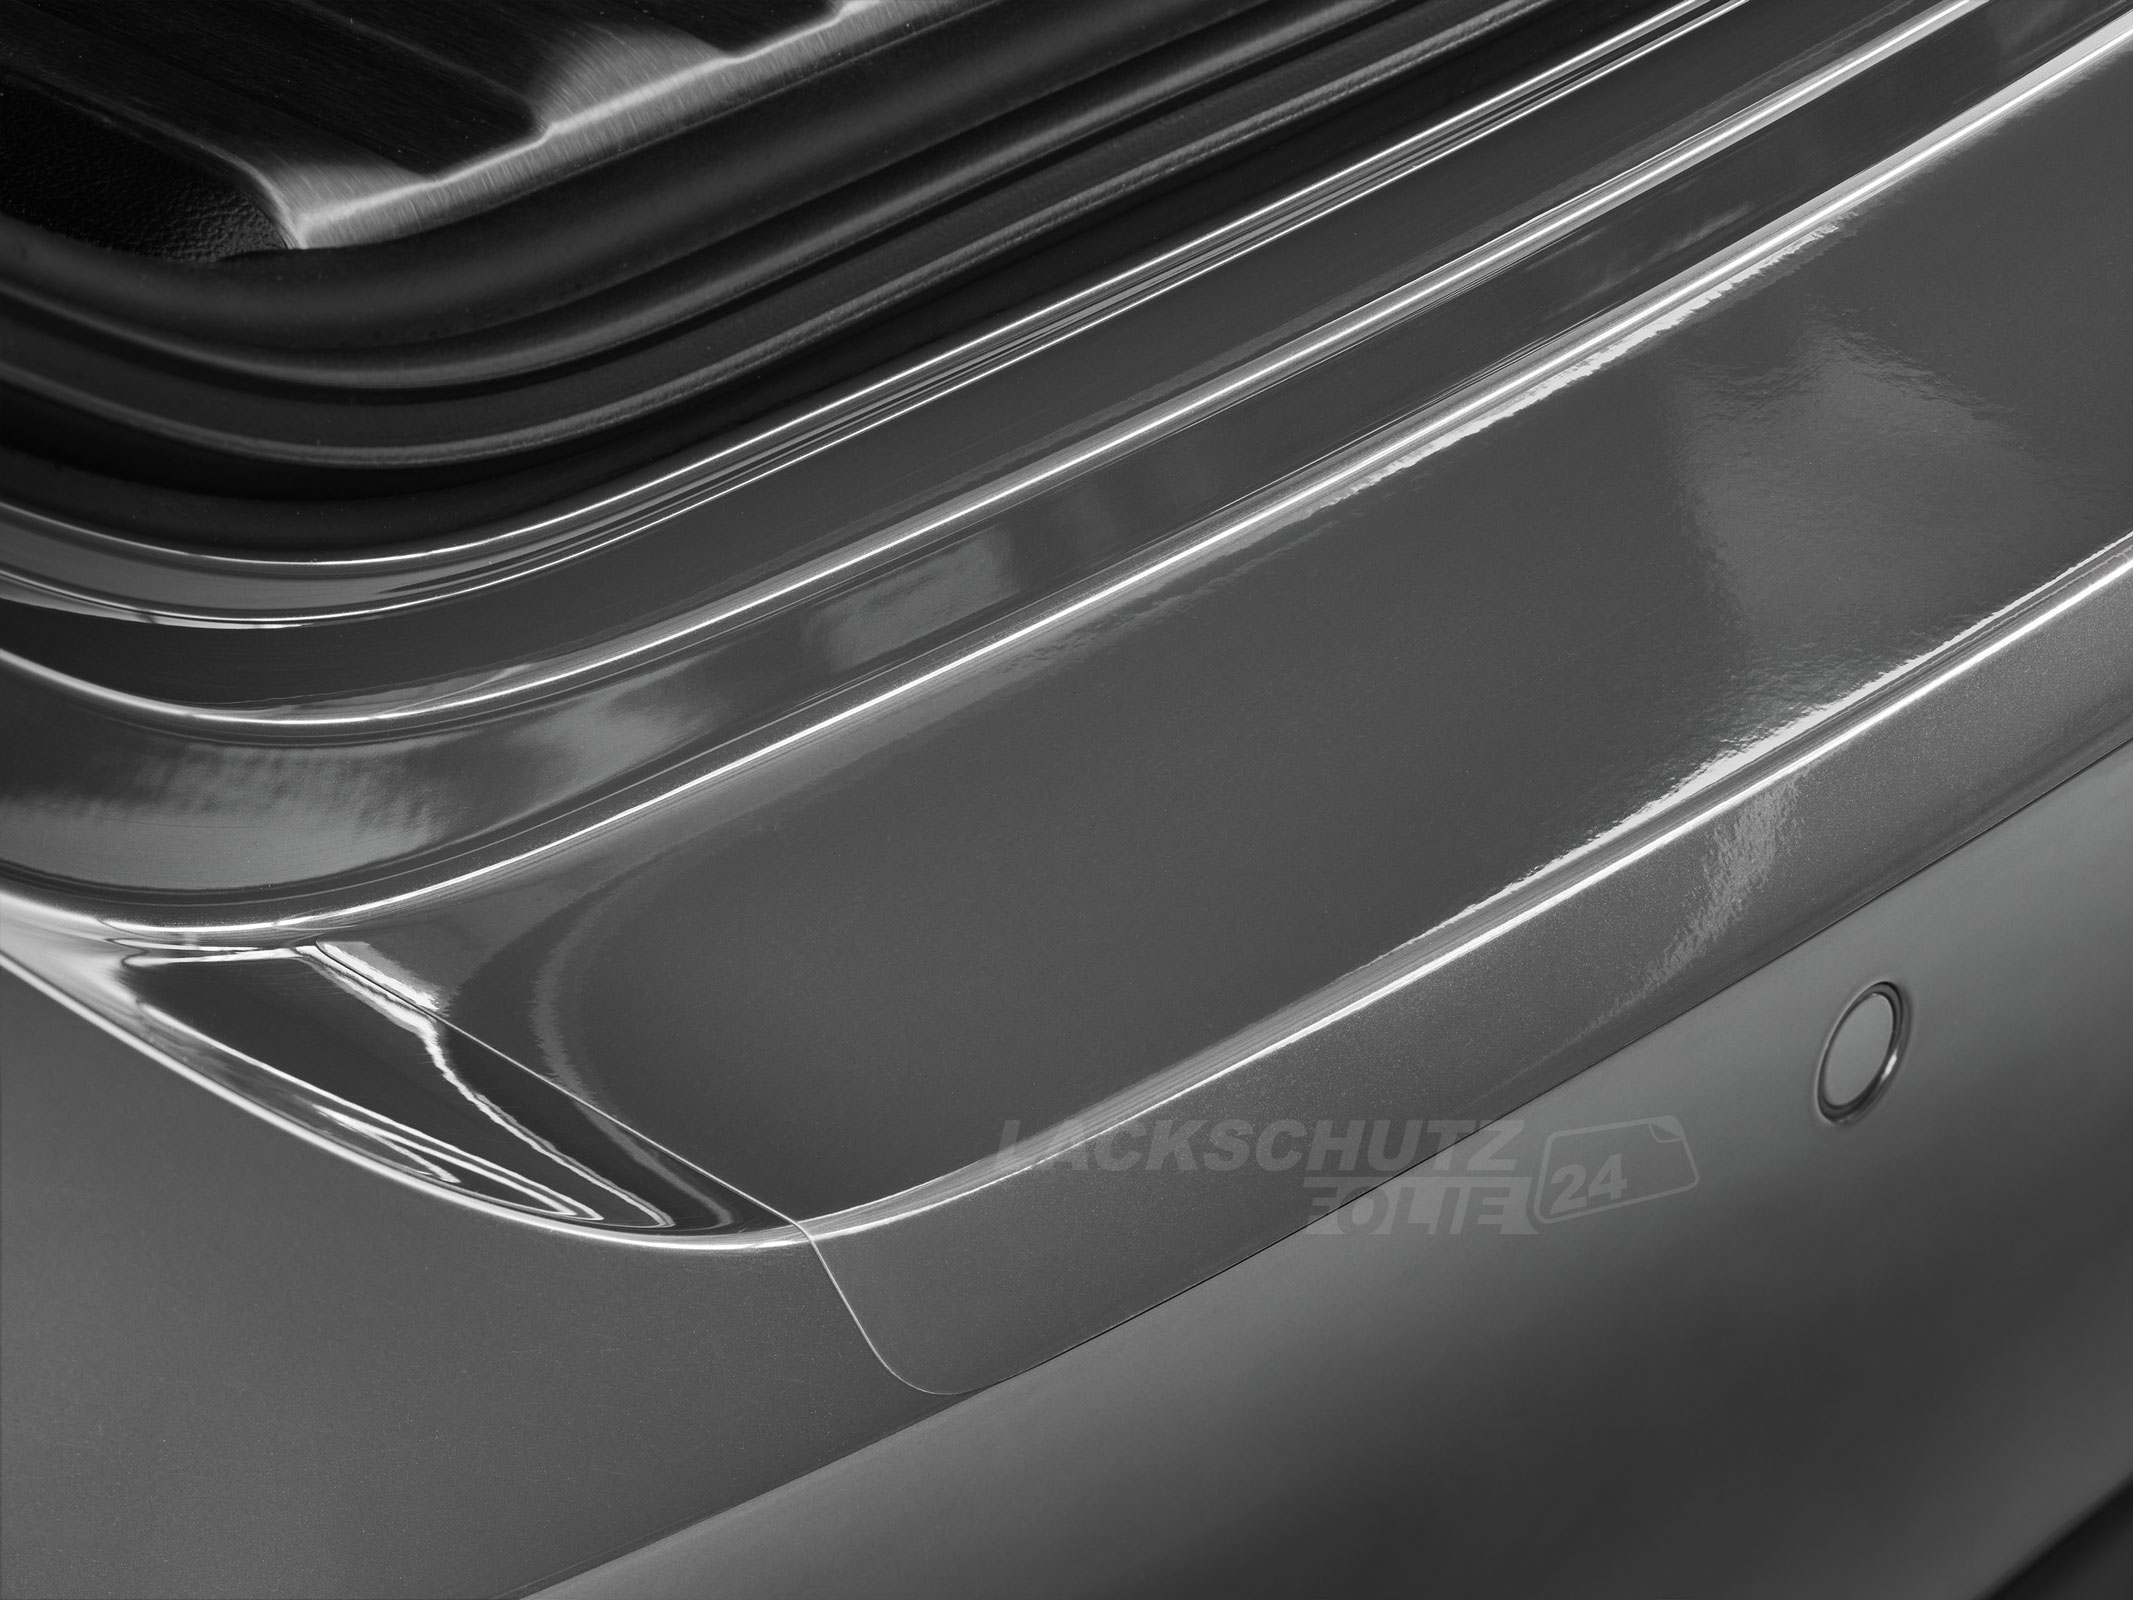 Ladekantenschutzfolie - Transparent Glatt Hochglänzend 240 µm stark für Audi A4 Limousine B9, Typ 8W, ab BJ 11/2015 + Facelift